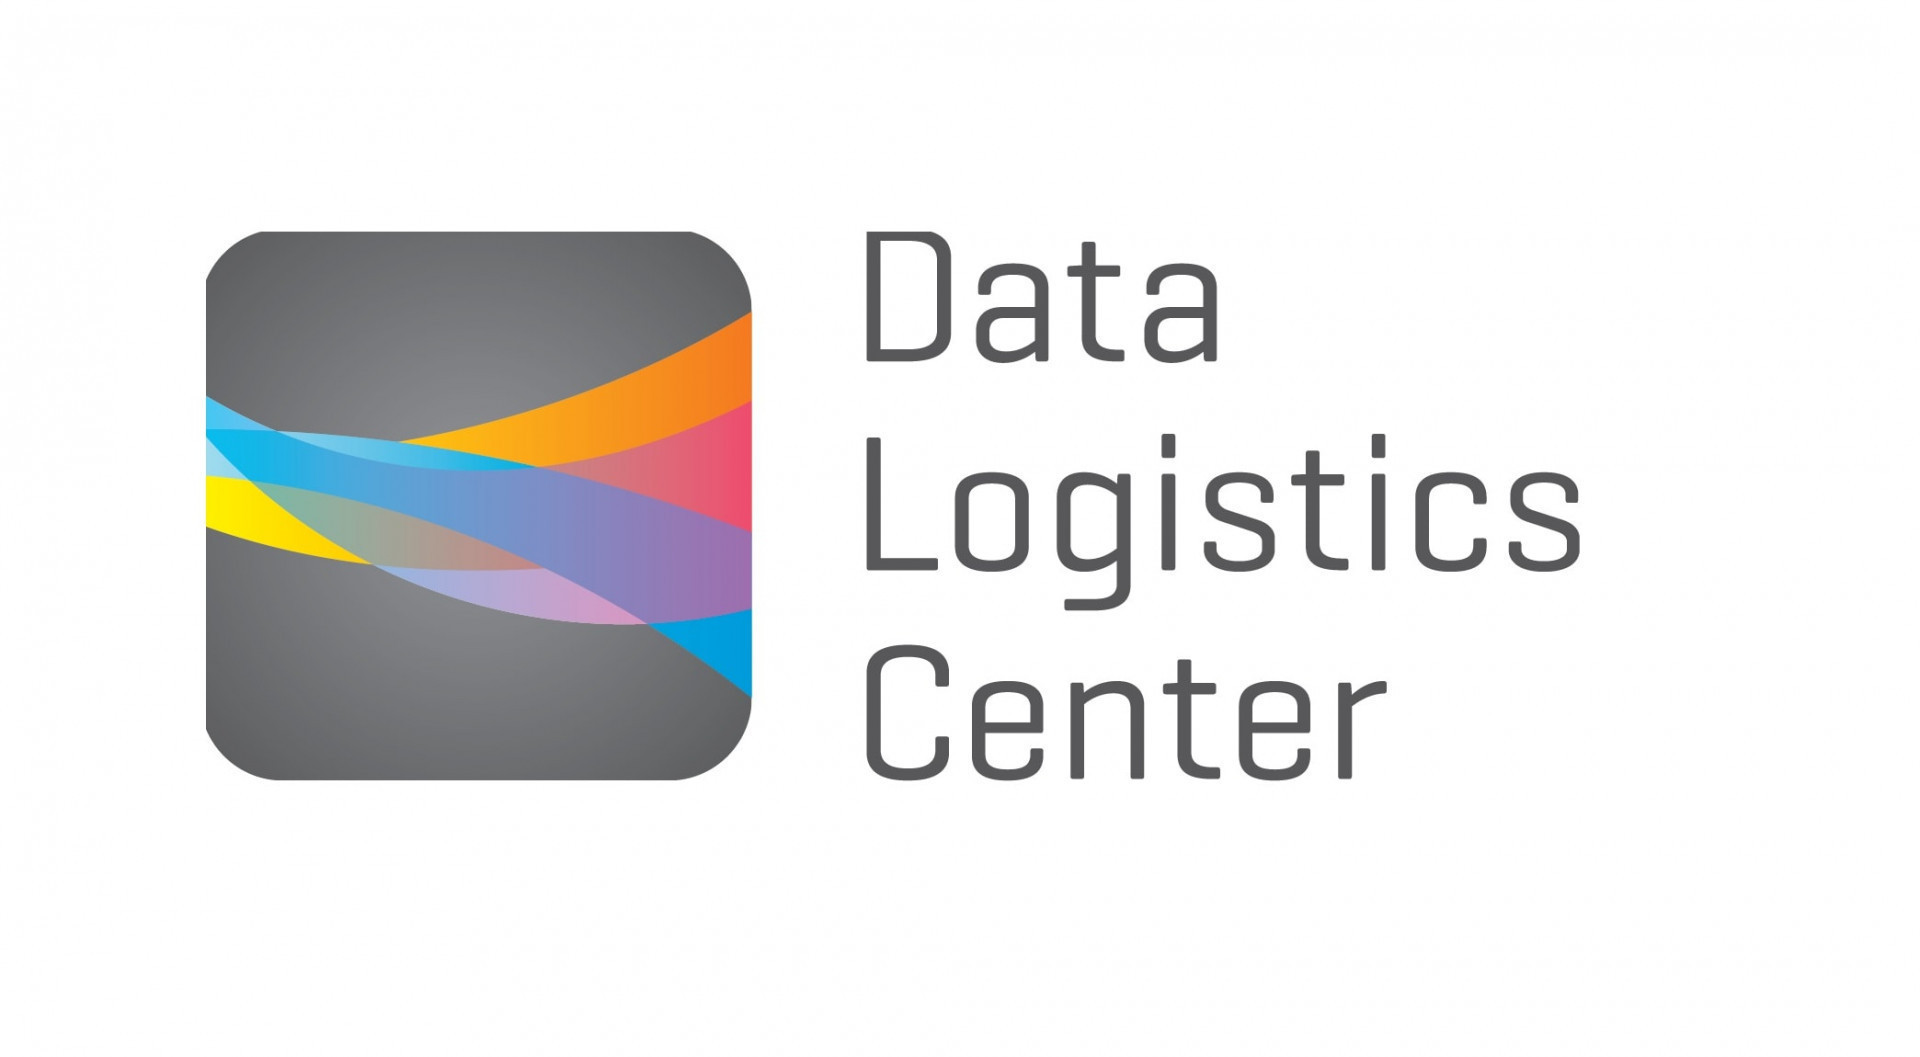 DLC Data Logistics Center